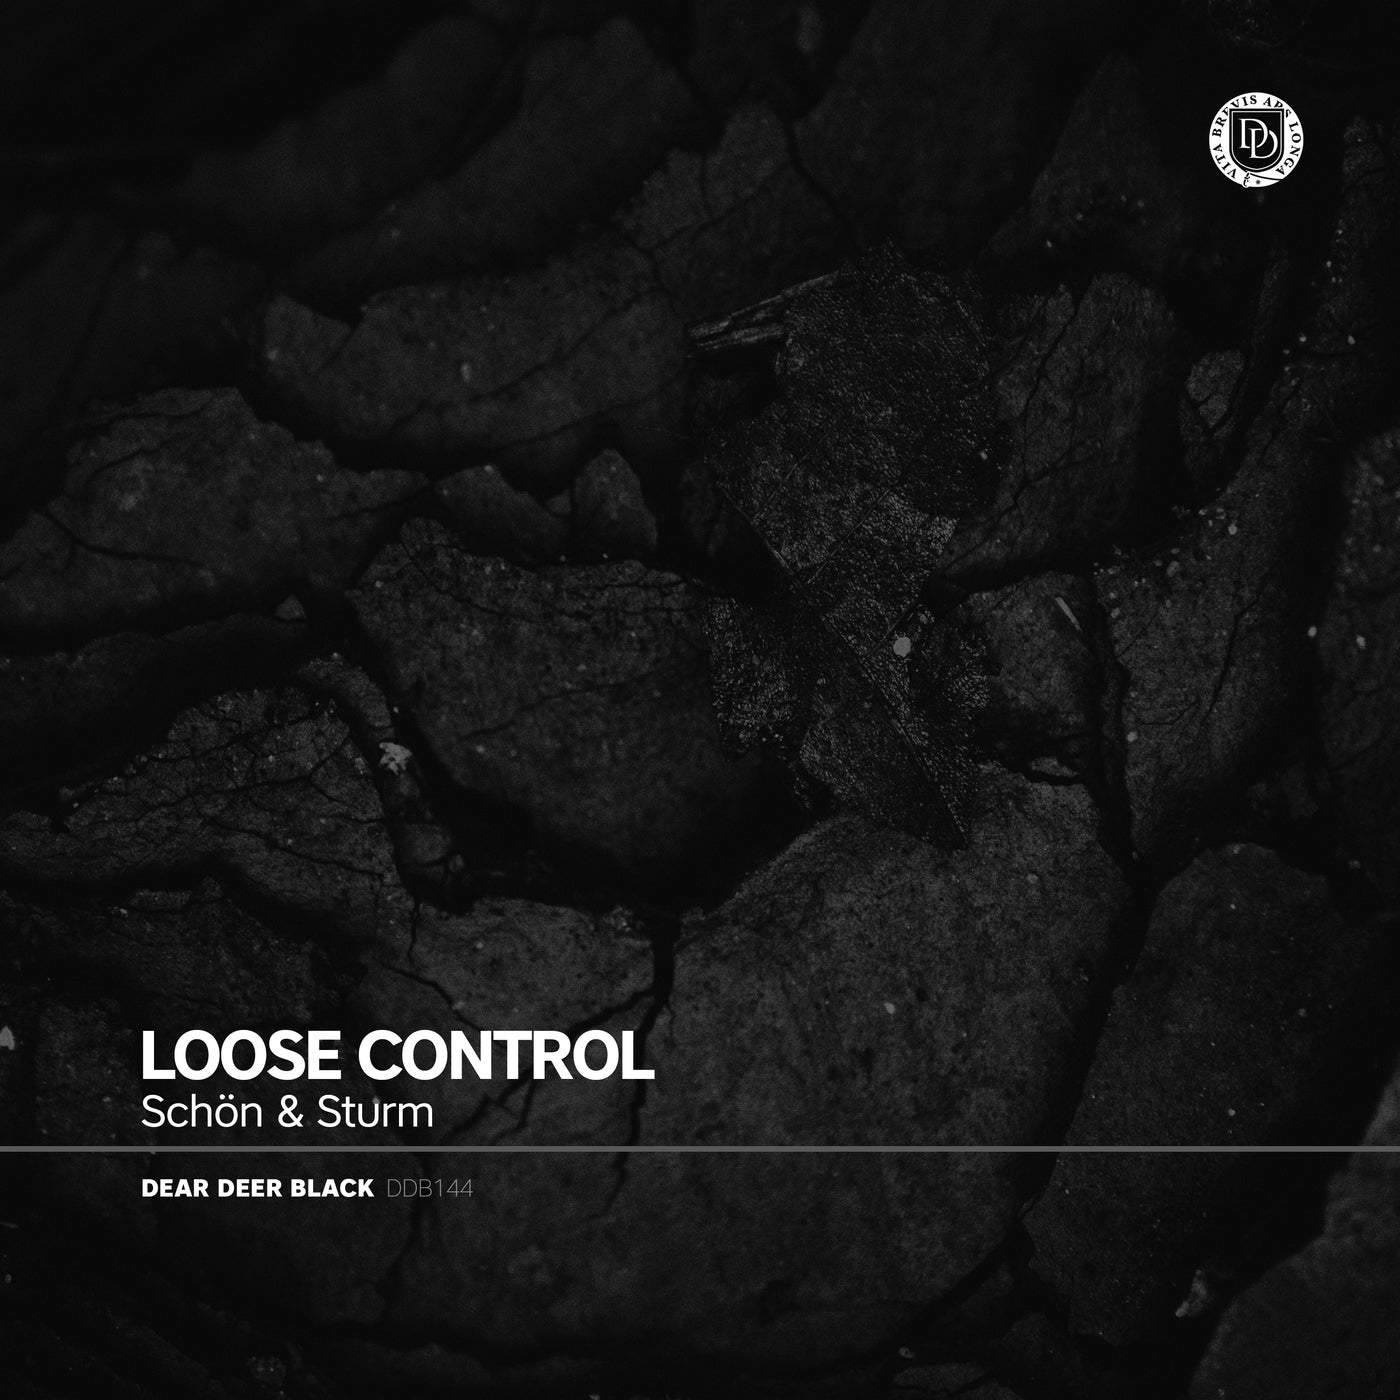 image cover: Schon & Sturm - Loose Control / DDB144